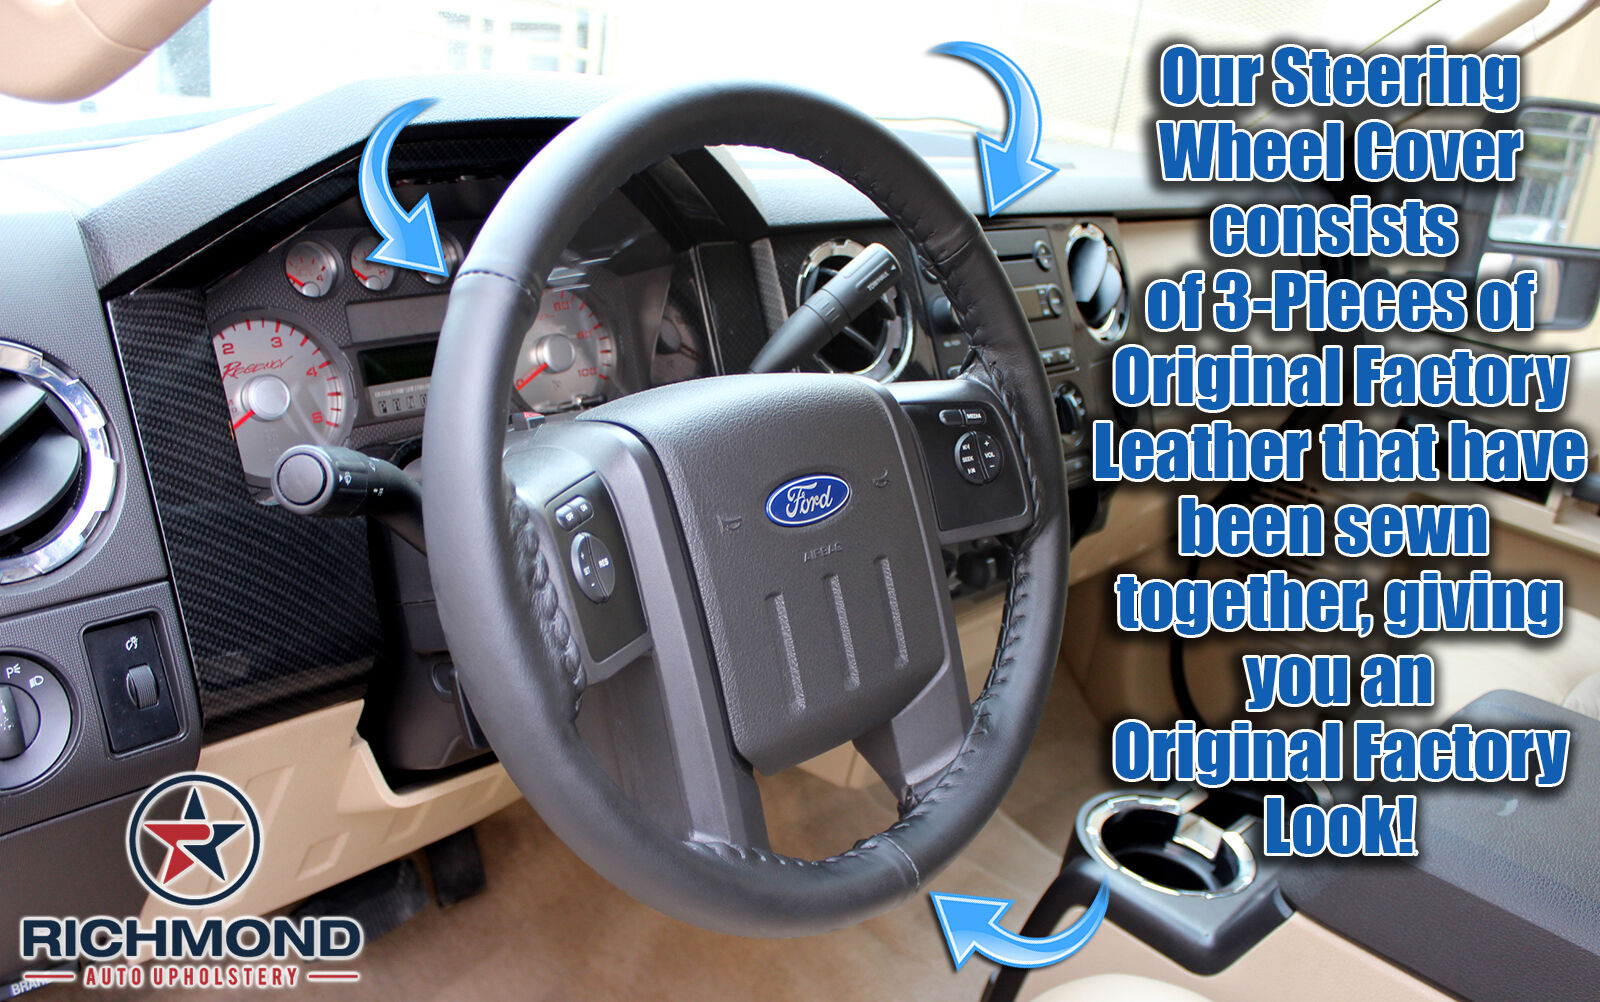 2009 Ford Explorer SportTrac -Black Leather Steering Wheel Cover w/Needle/Thread